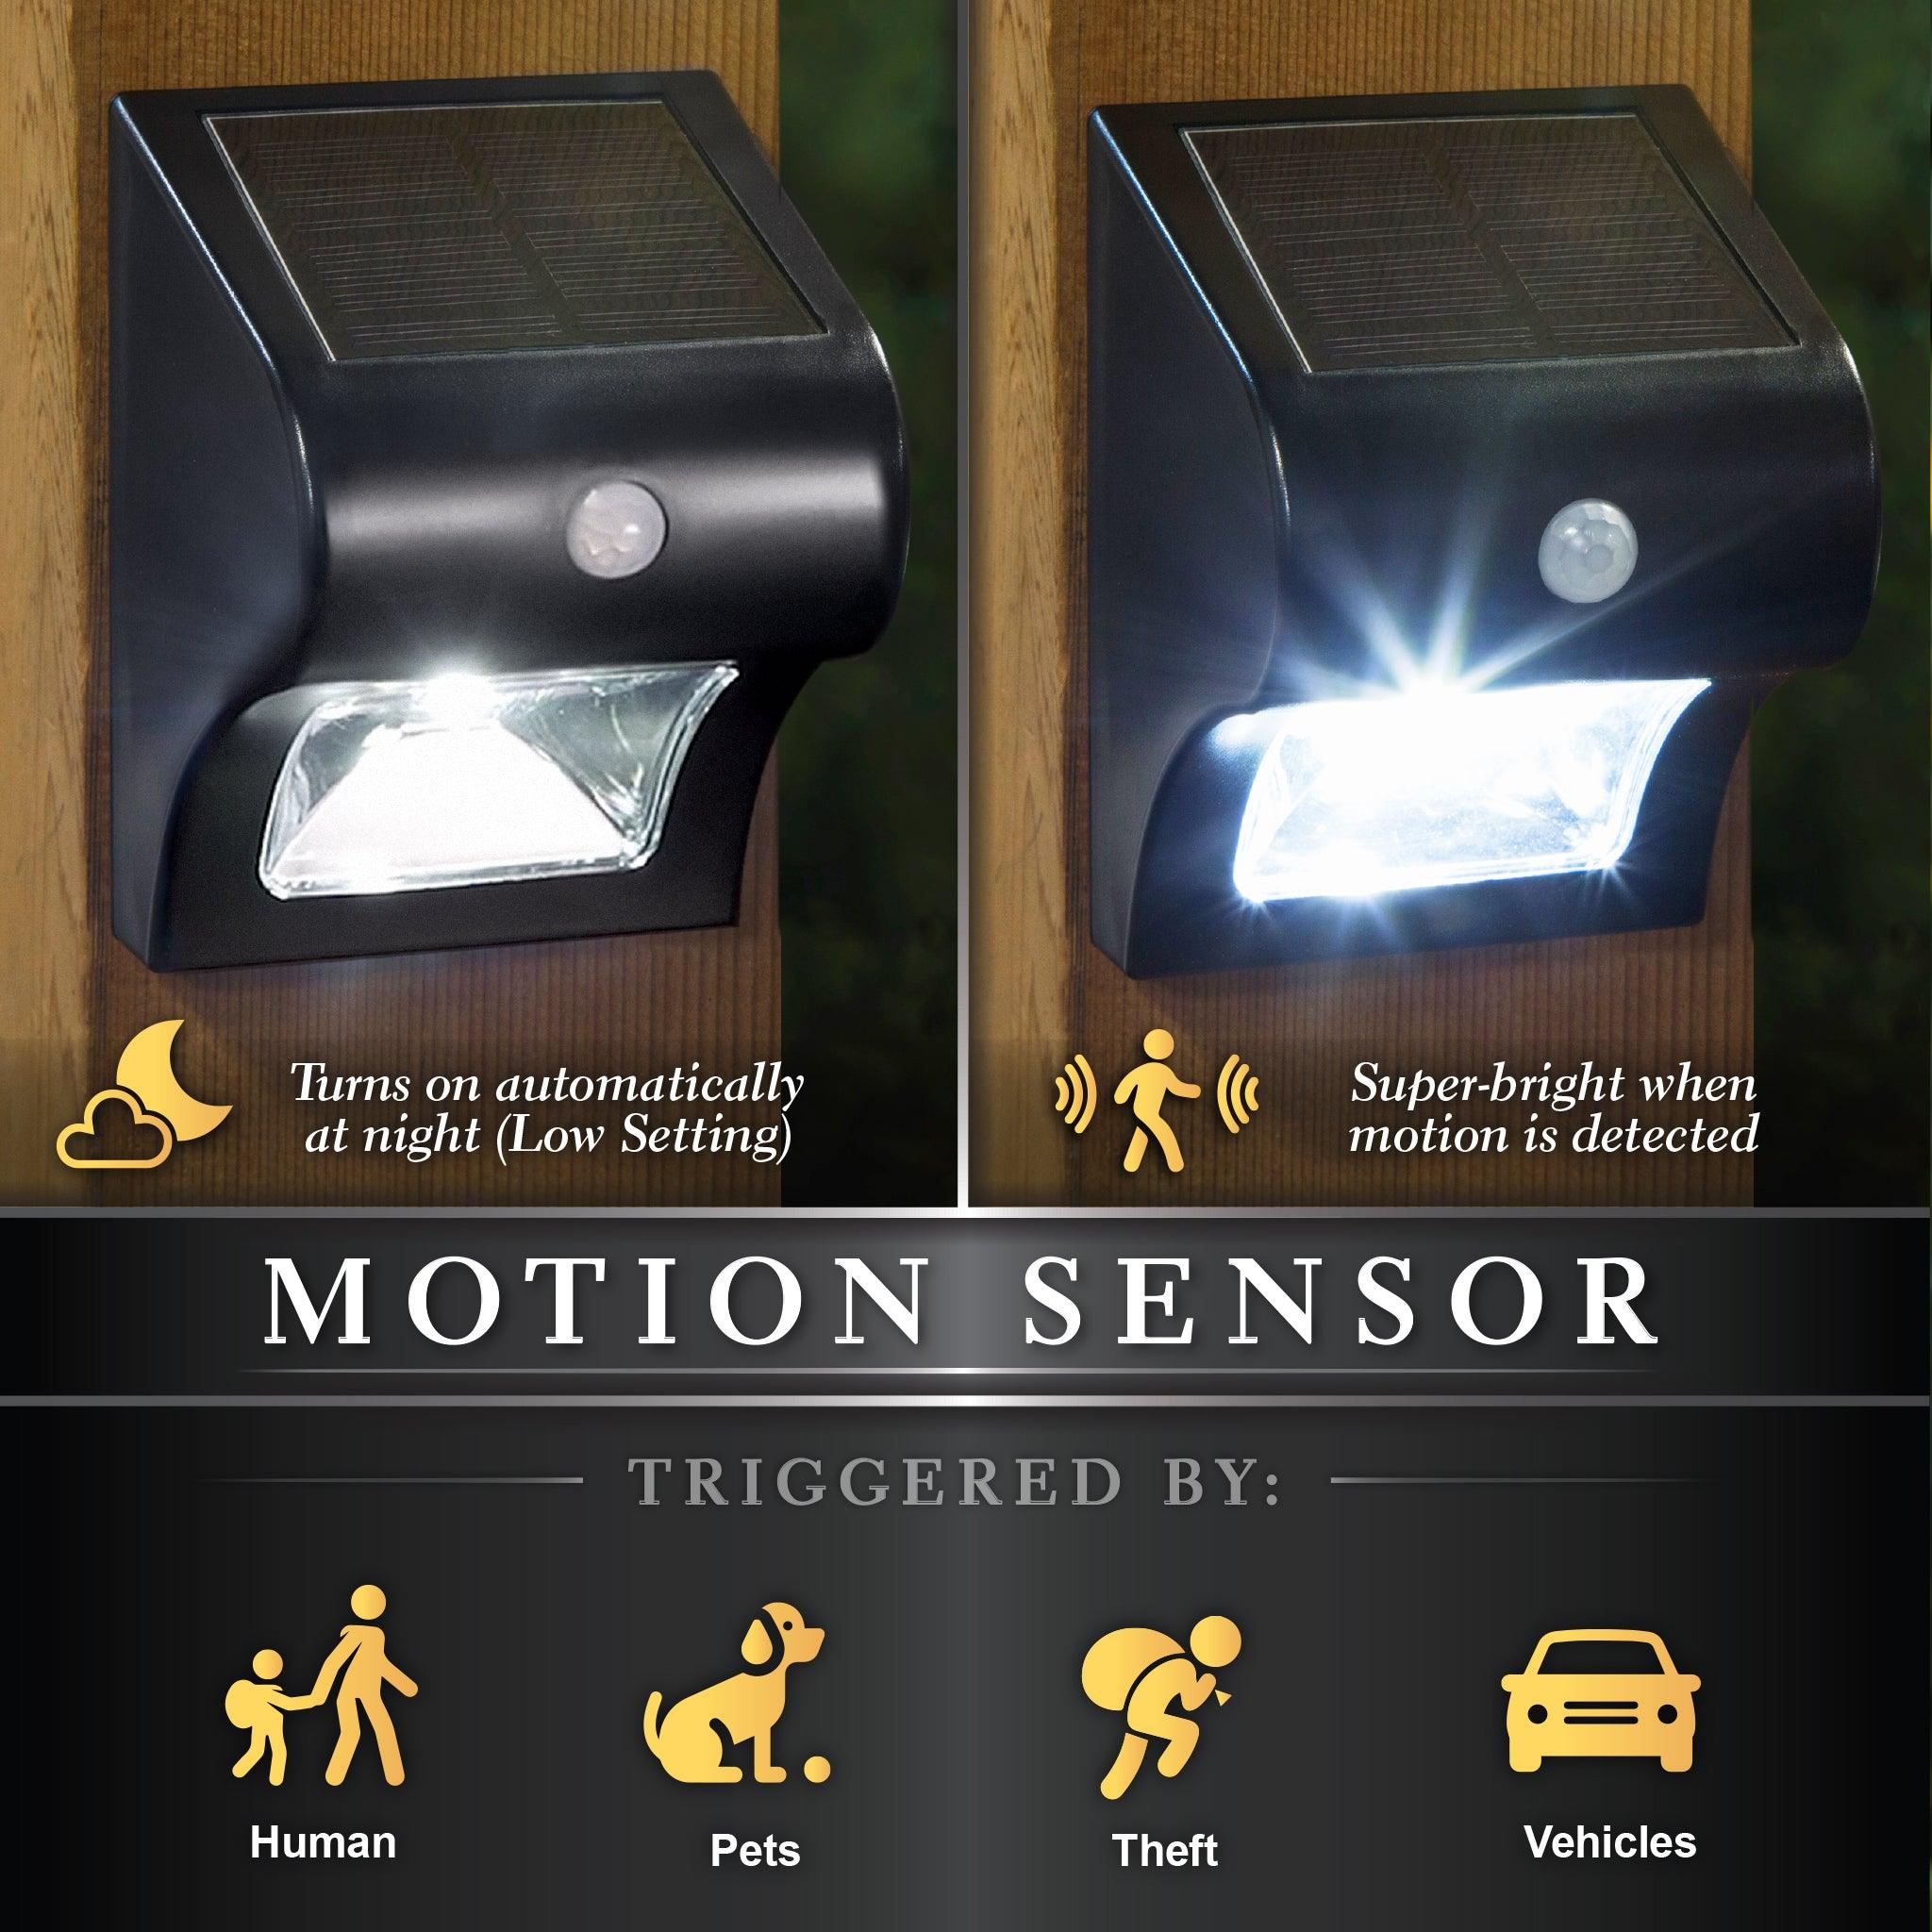 Solar Motion Sensor Deck & Wall Light - Classy Caps Mfg. Inc.